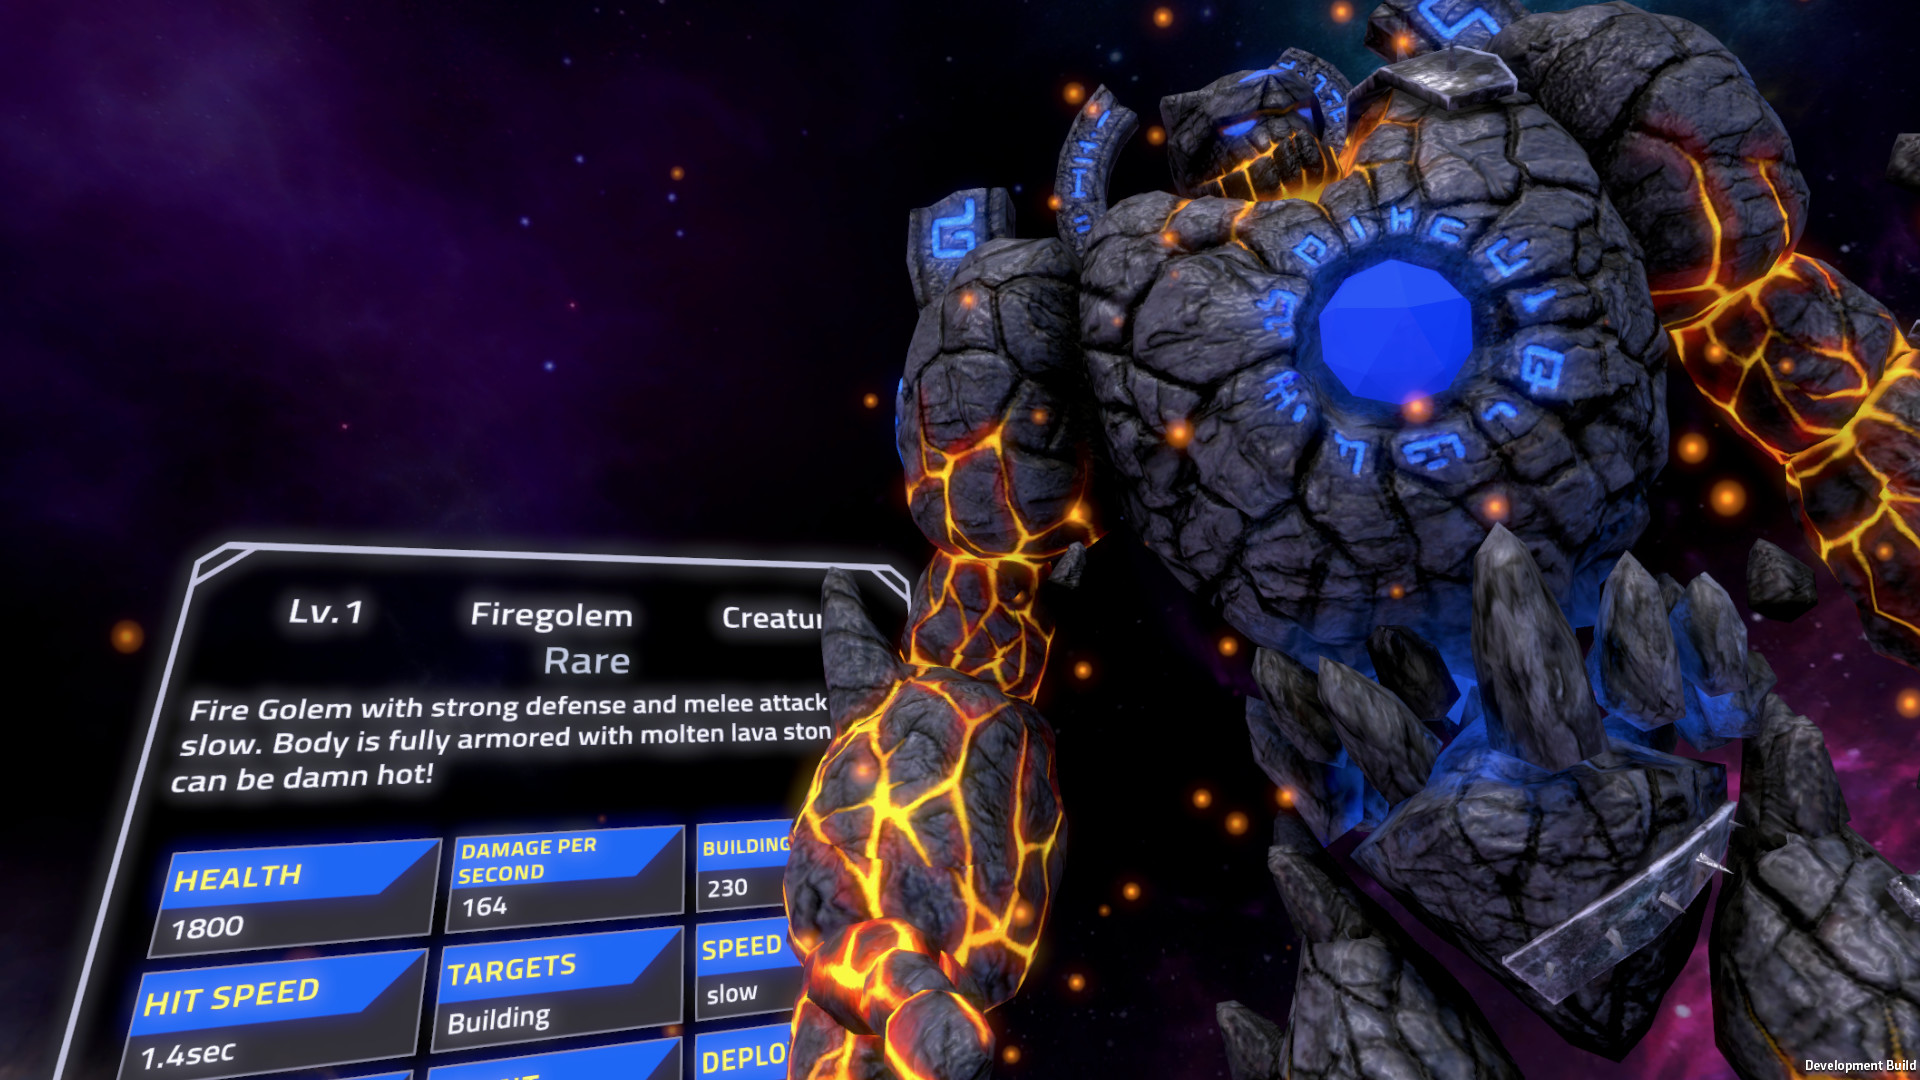 Battle Summoners VR screenshot